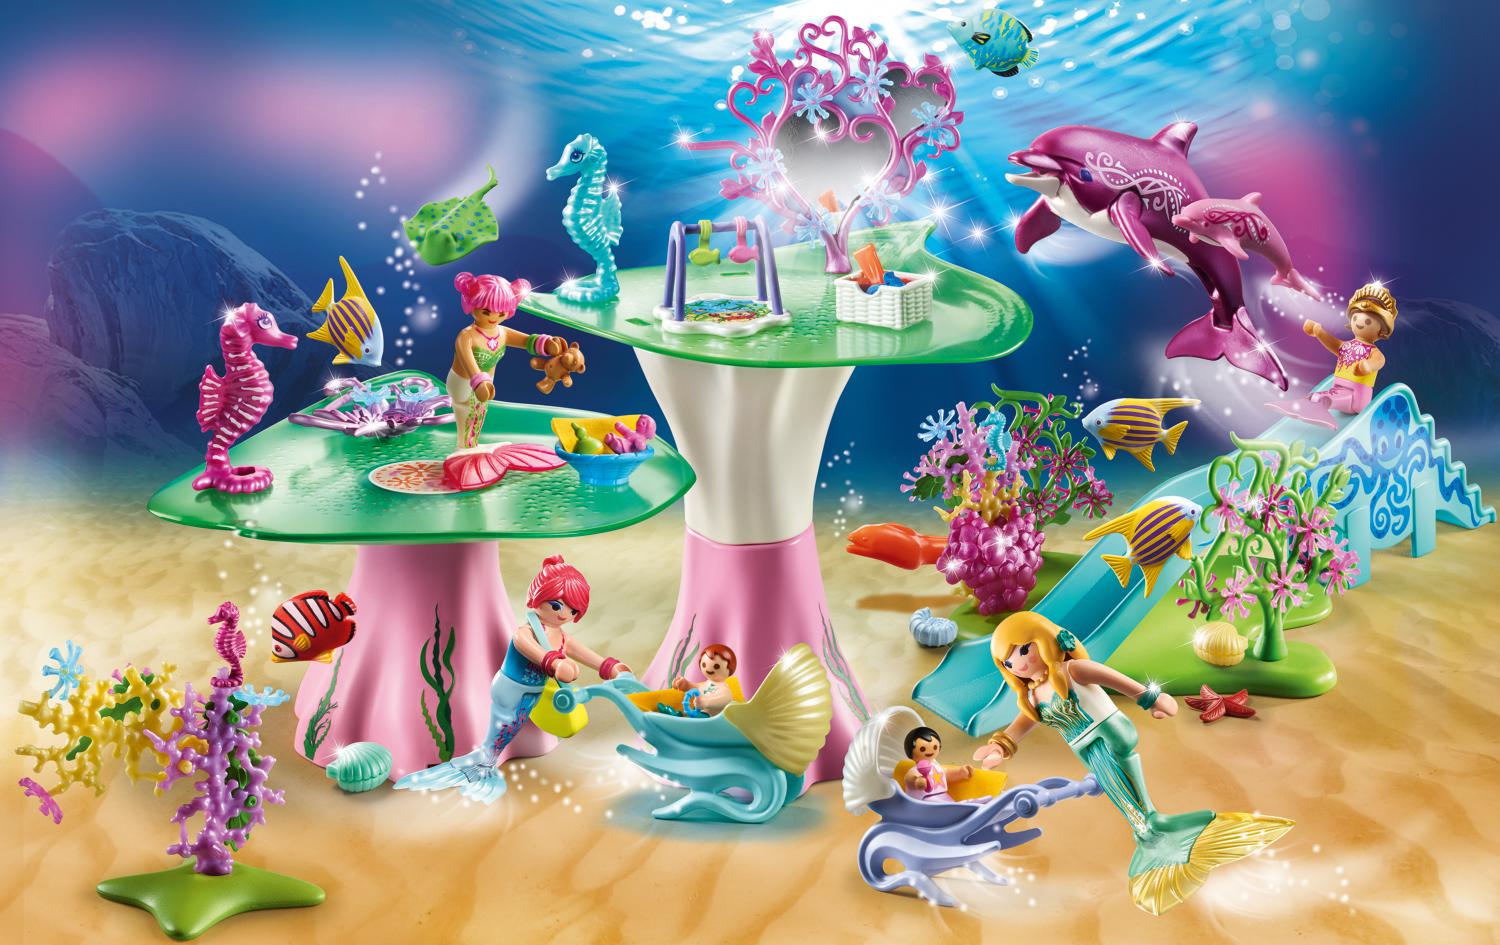 Playmobil - Γοργόνες Στην Υποβρύχια Παιδική Χαρά